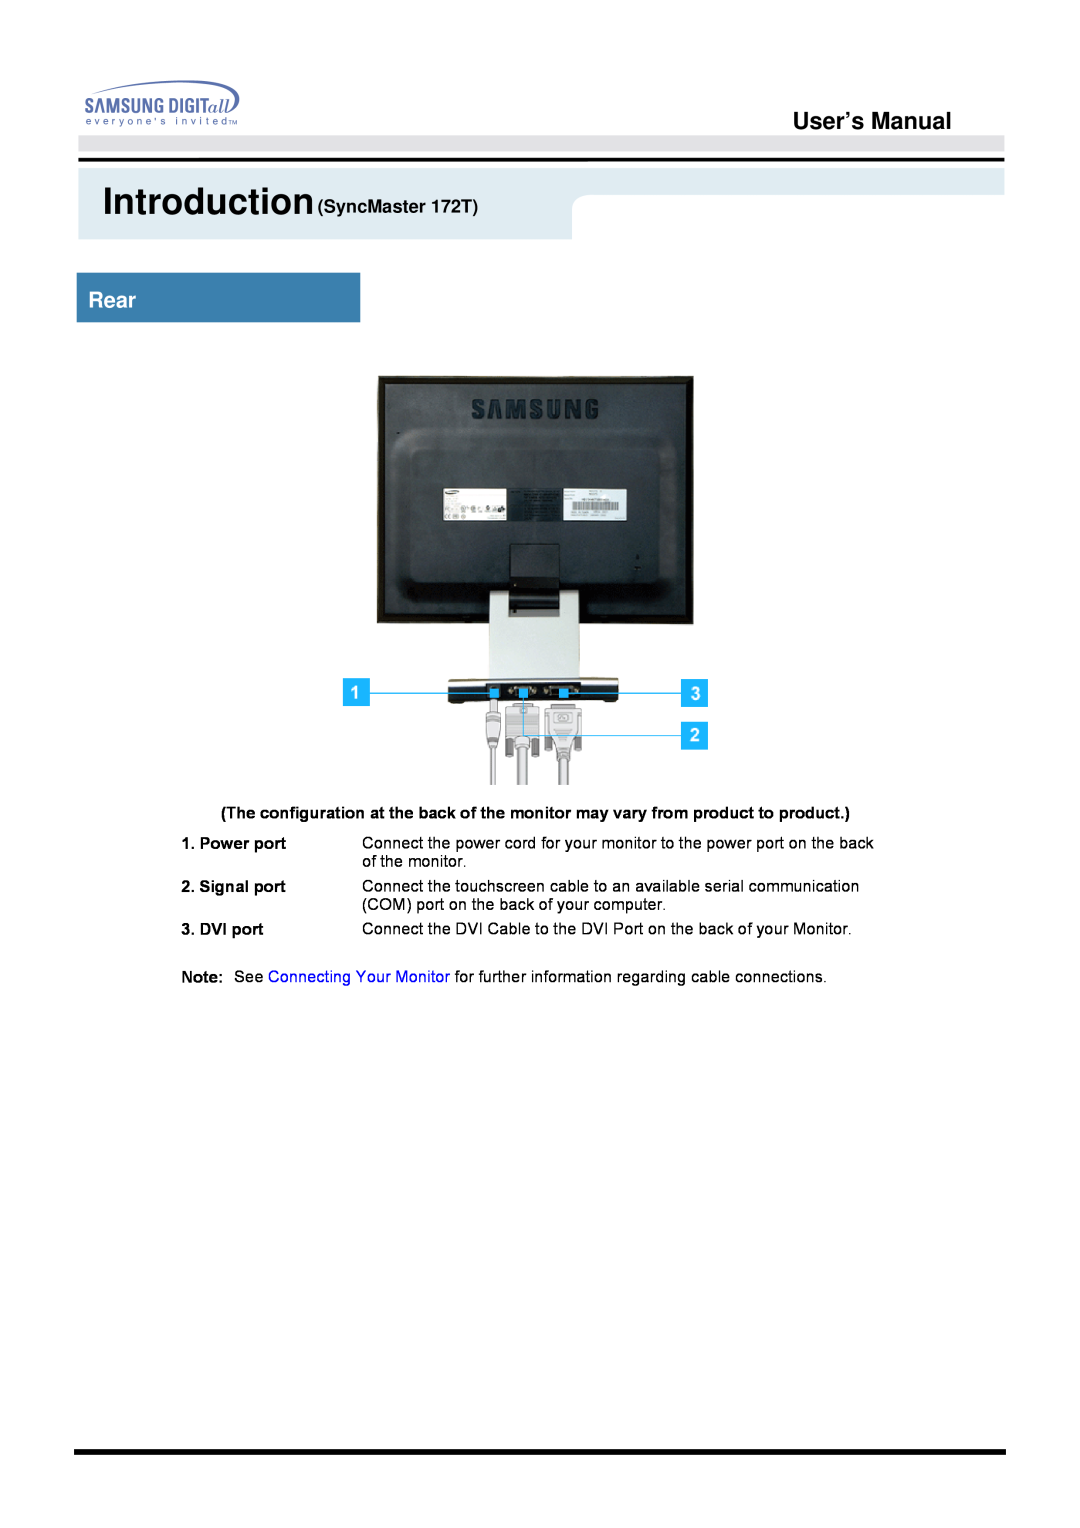 Samsung 172S manual User’s Manual, Rear, IntroductionSyncMaster 172T, Signal port 3. DVI port 